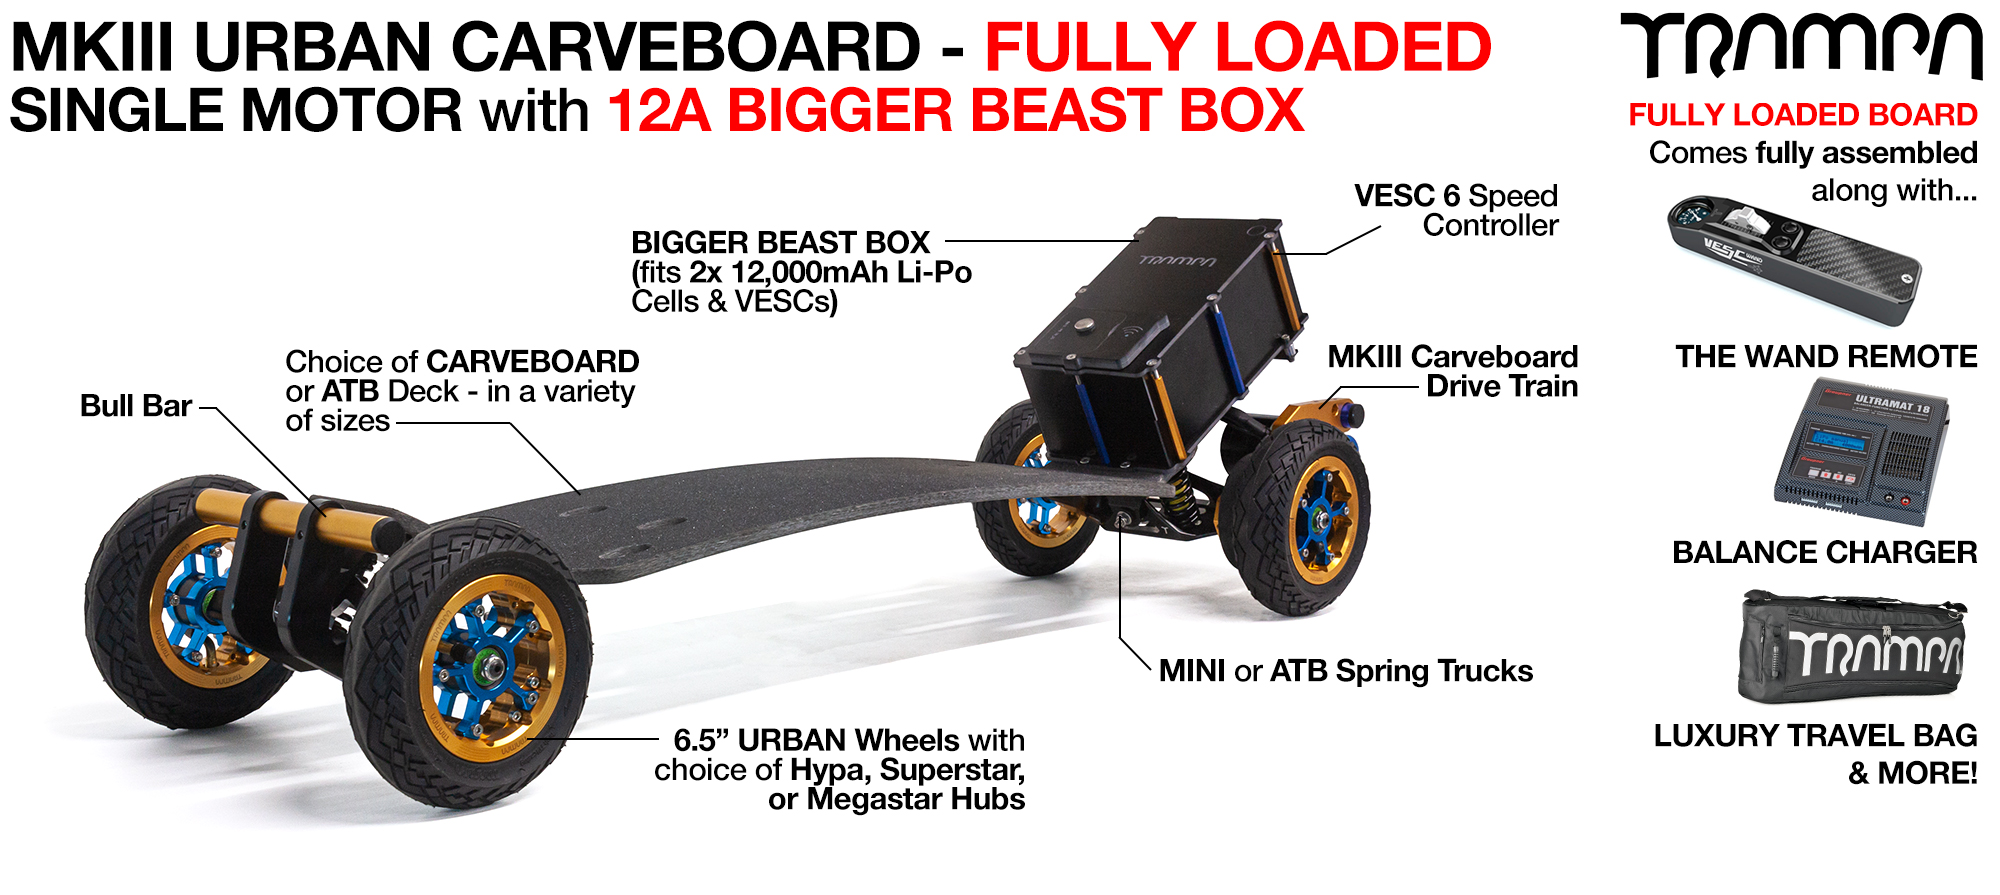 TRAMPA's MkIII Electric URBAN Carveboard - uses Mini Spring Trucks with MkIII Carve board Motor Mount's Custom TRAMPA hubs & 125mm URBAN longboard Tyres - SINGLE Motor 12A FULLY LOADED 